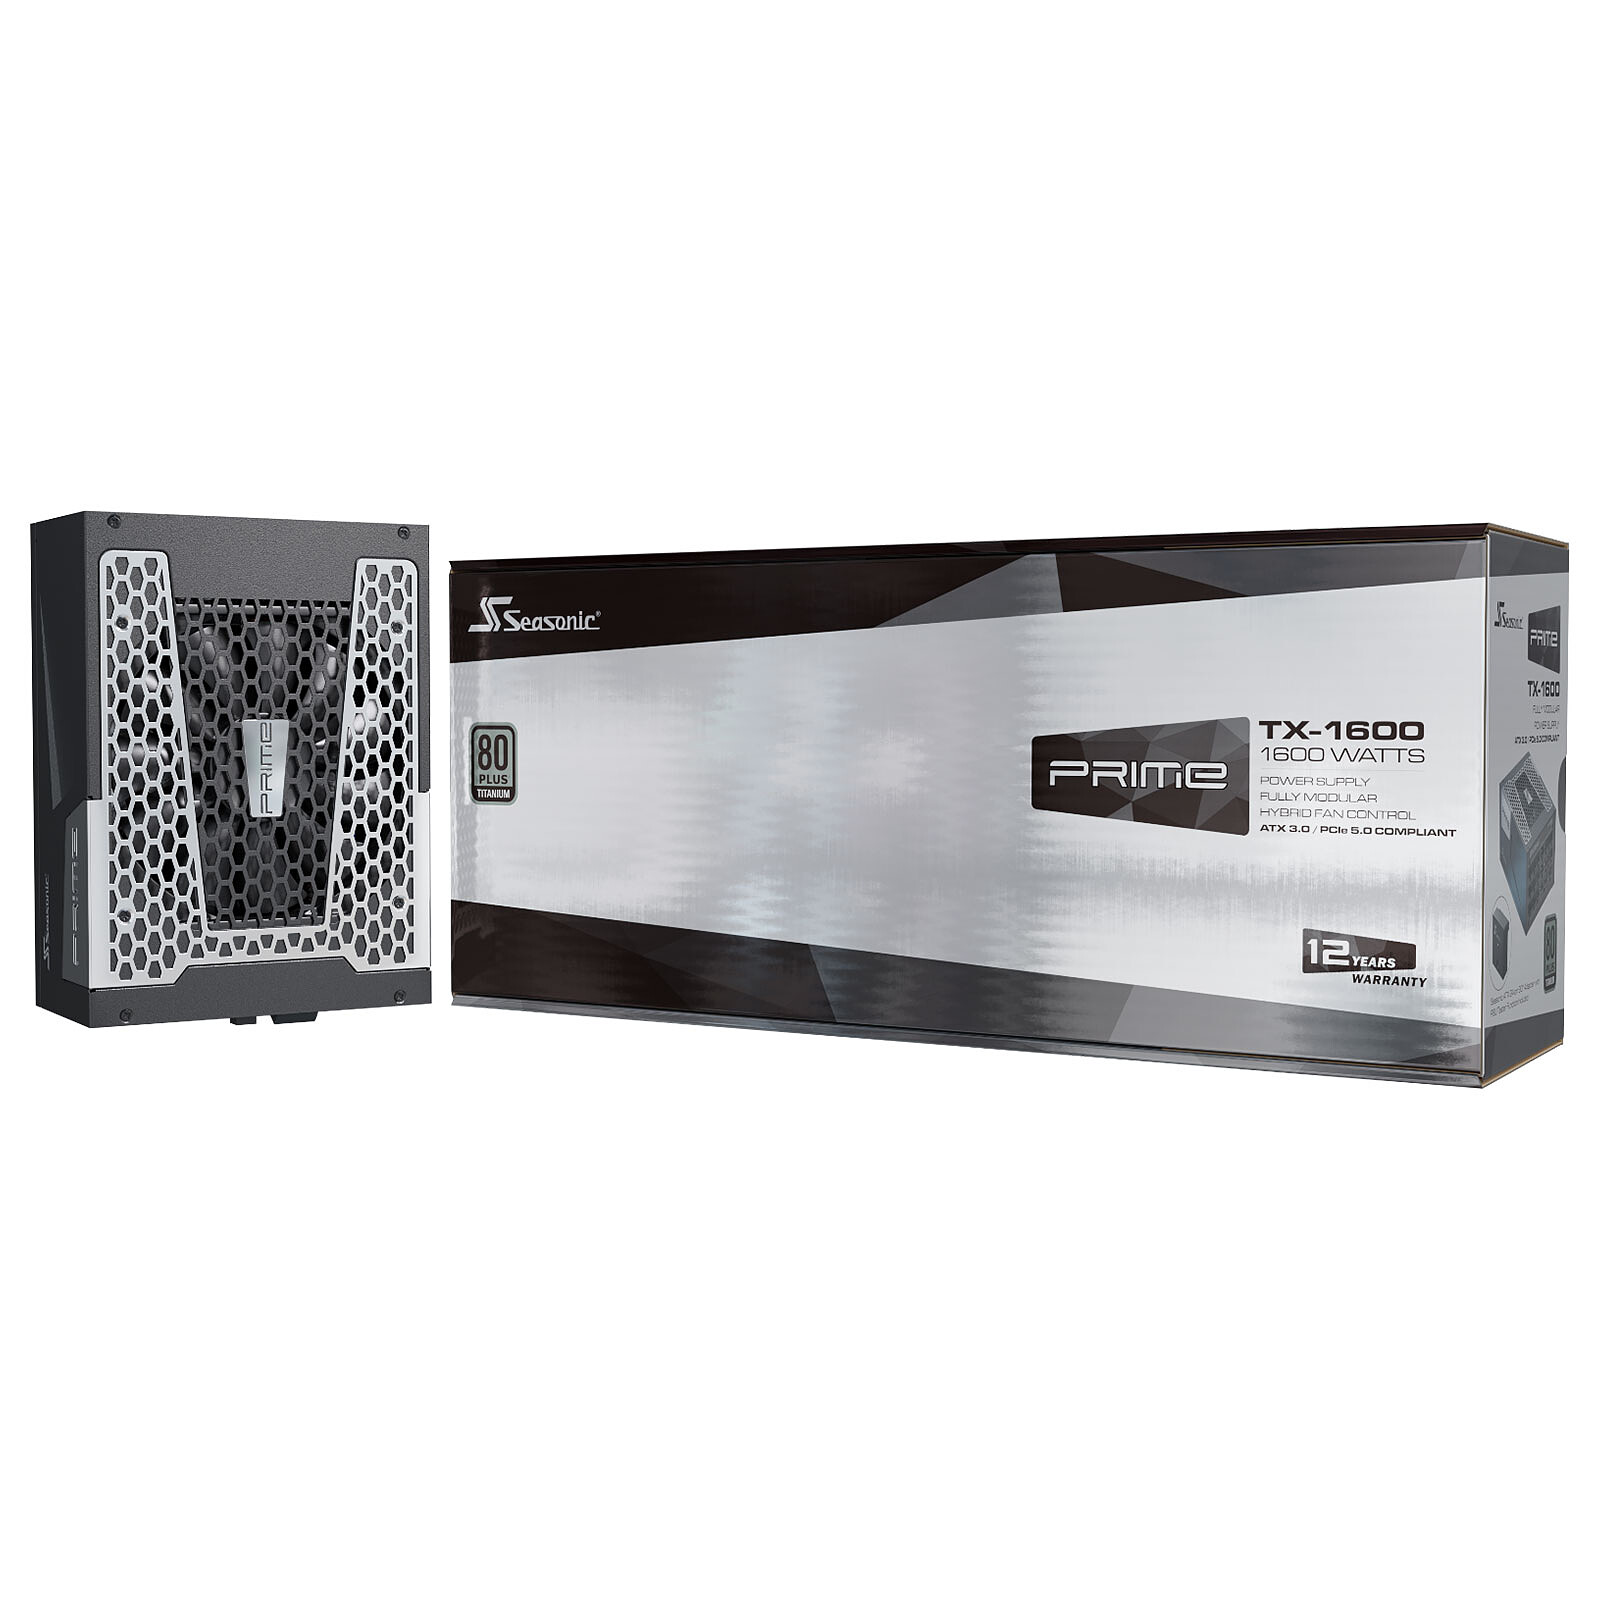 Seasonic VERTEX GX-1000 White - Alimentation PC - LDLC